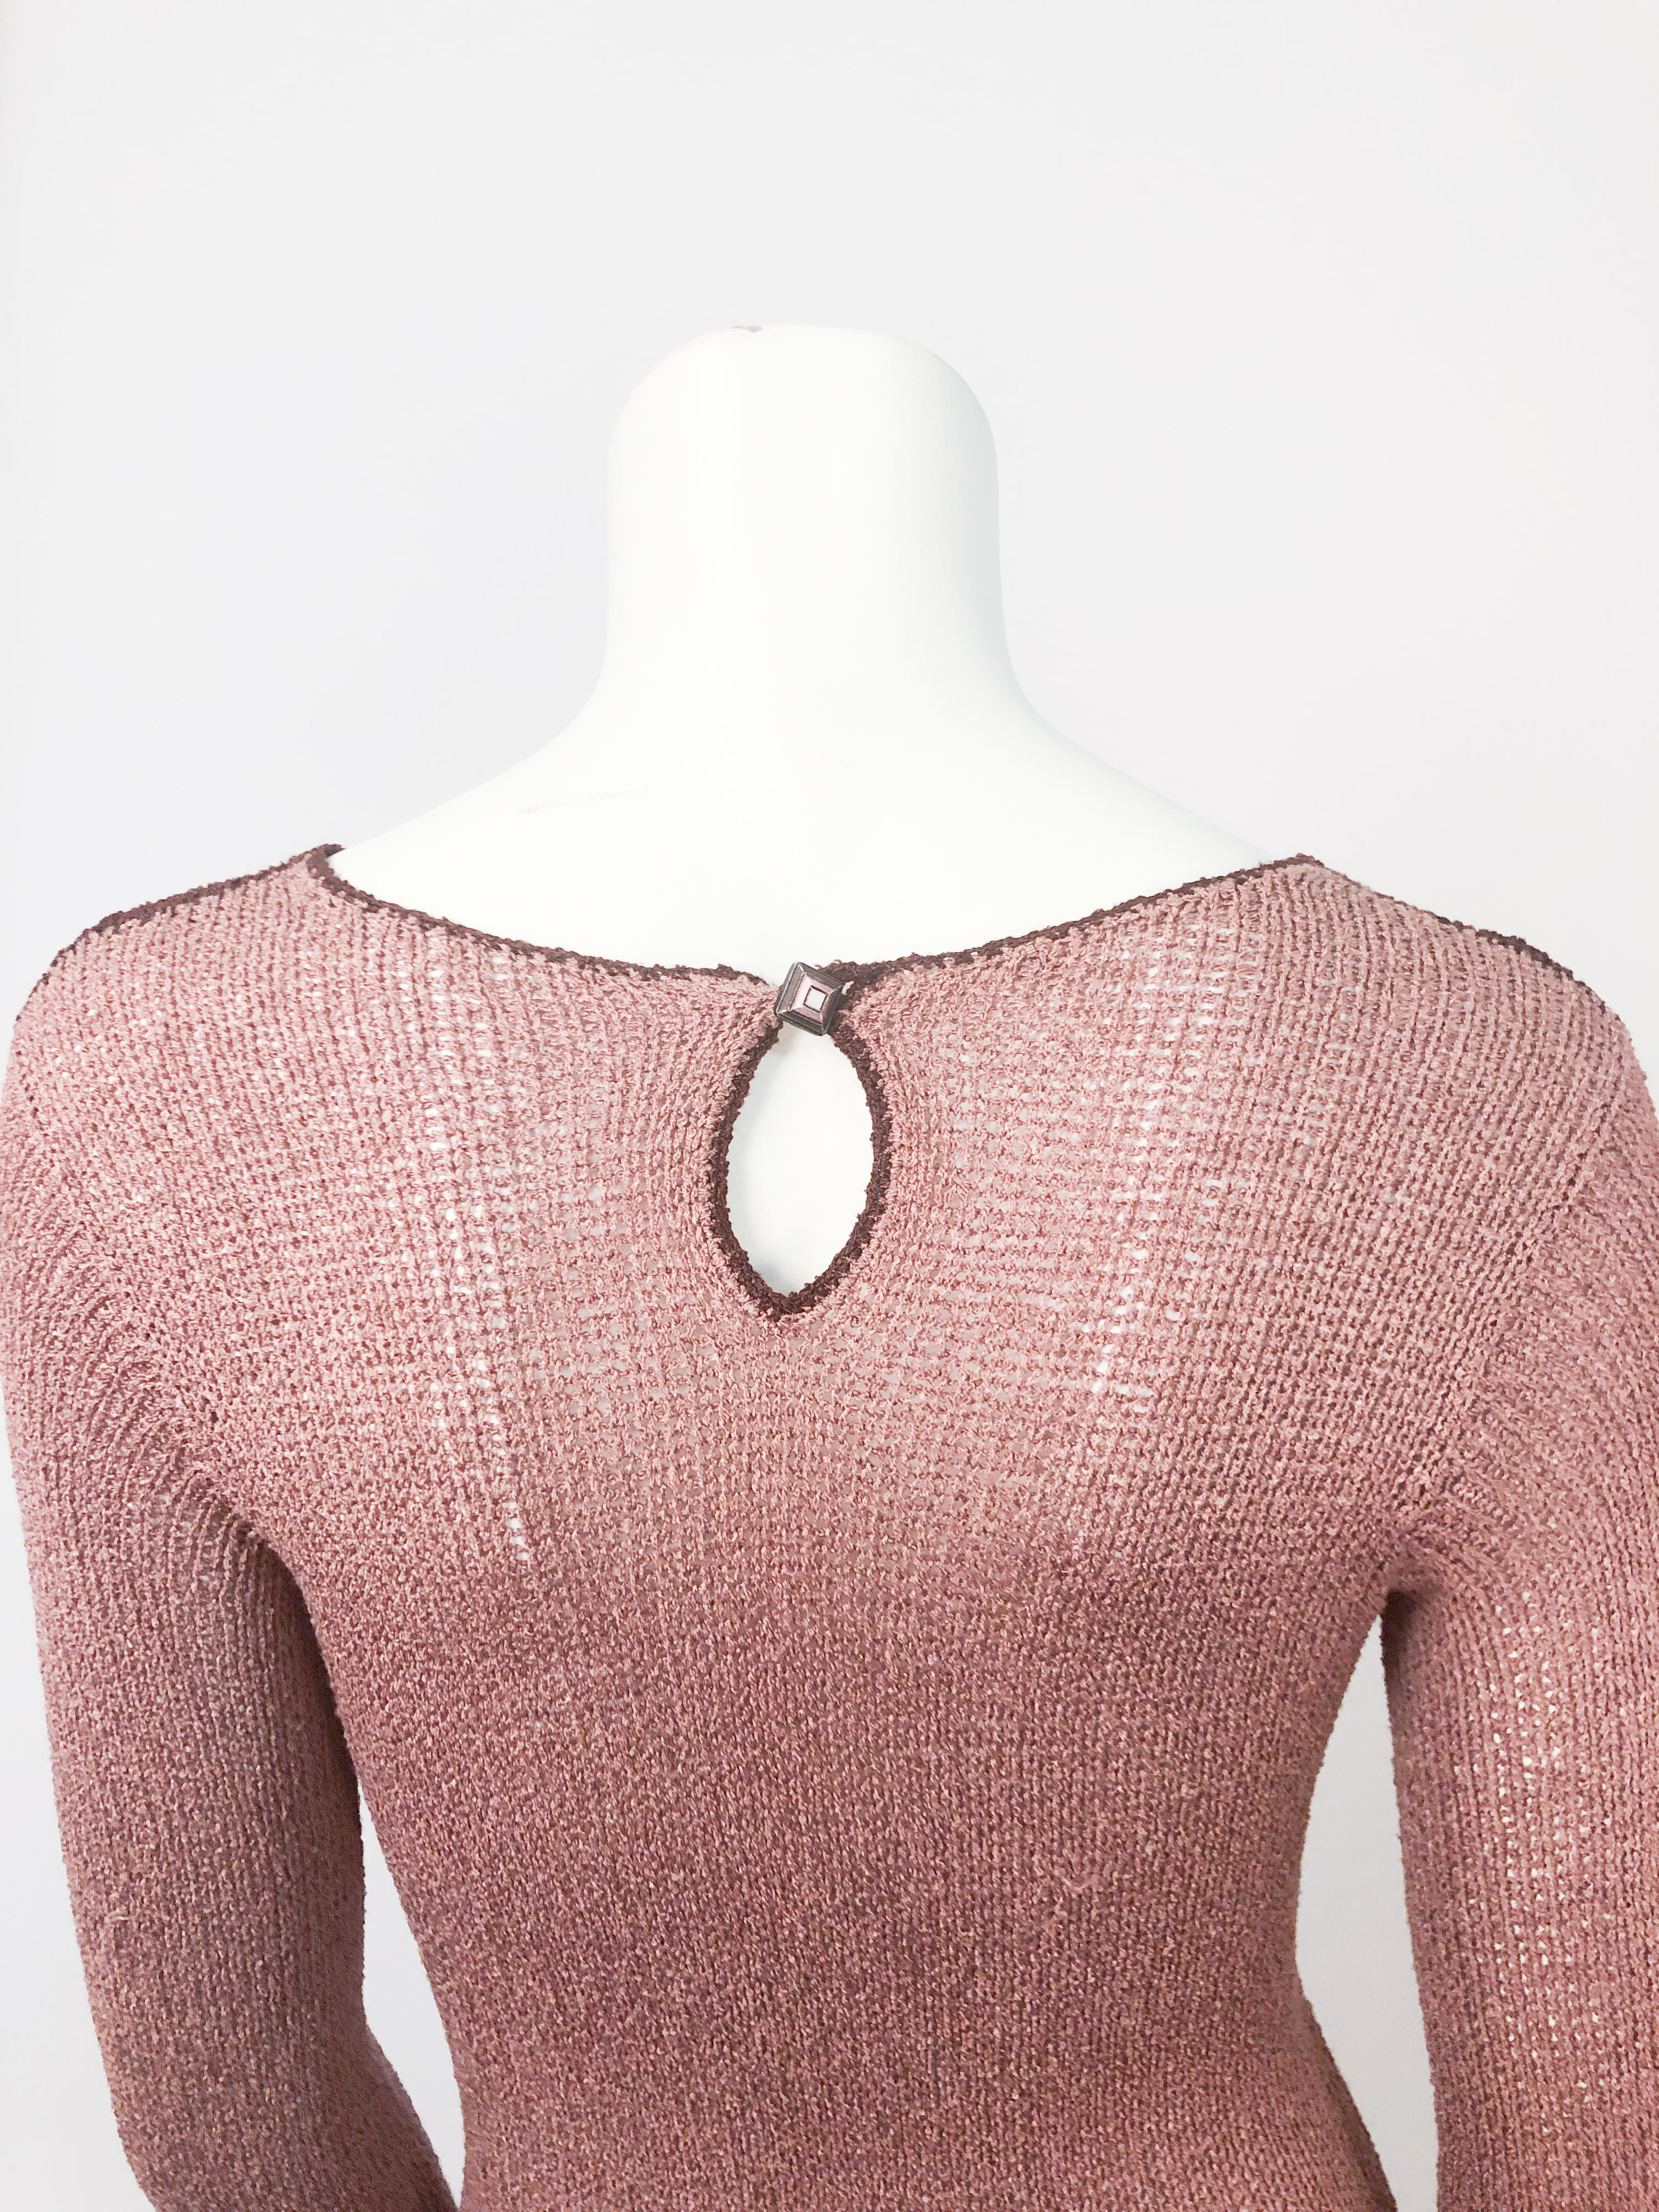 1930s Brown Knit Silk Dress 1